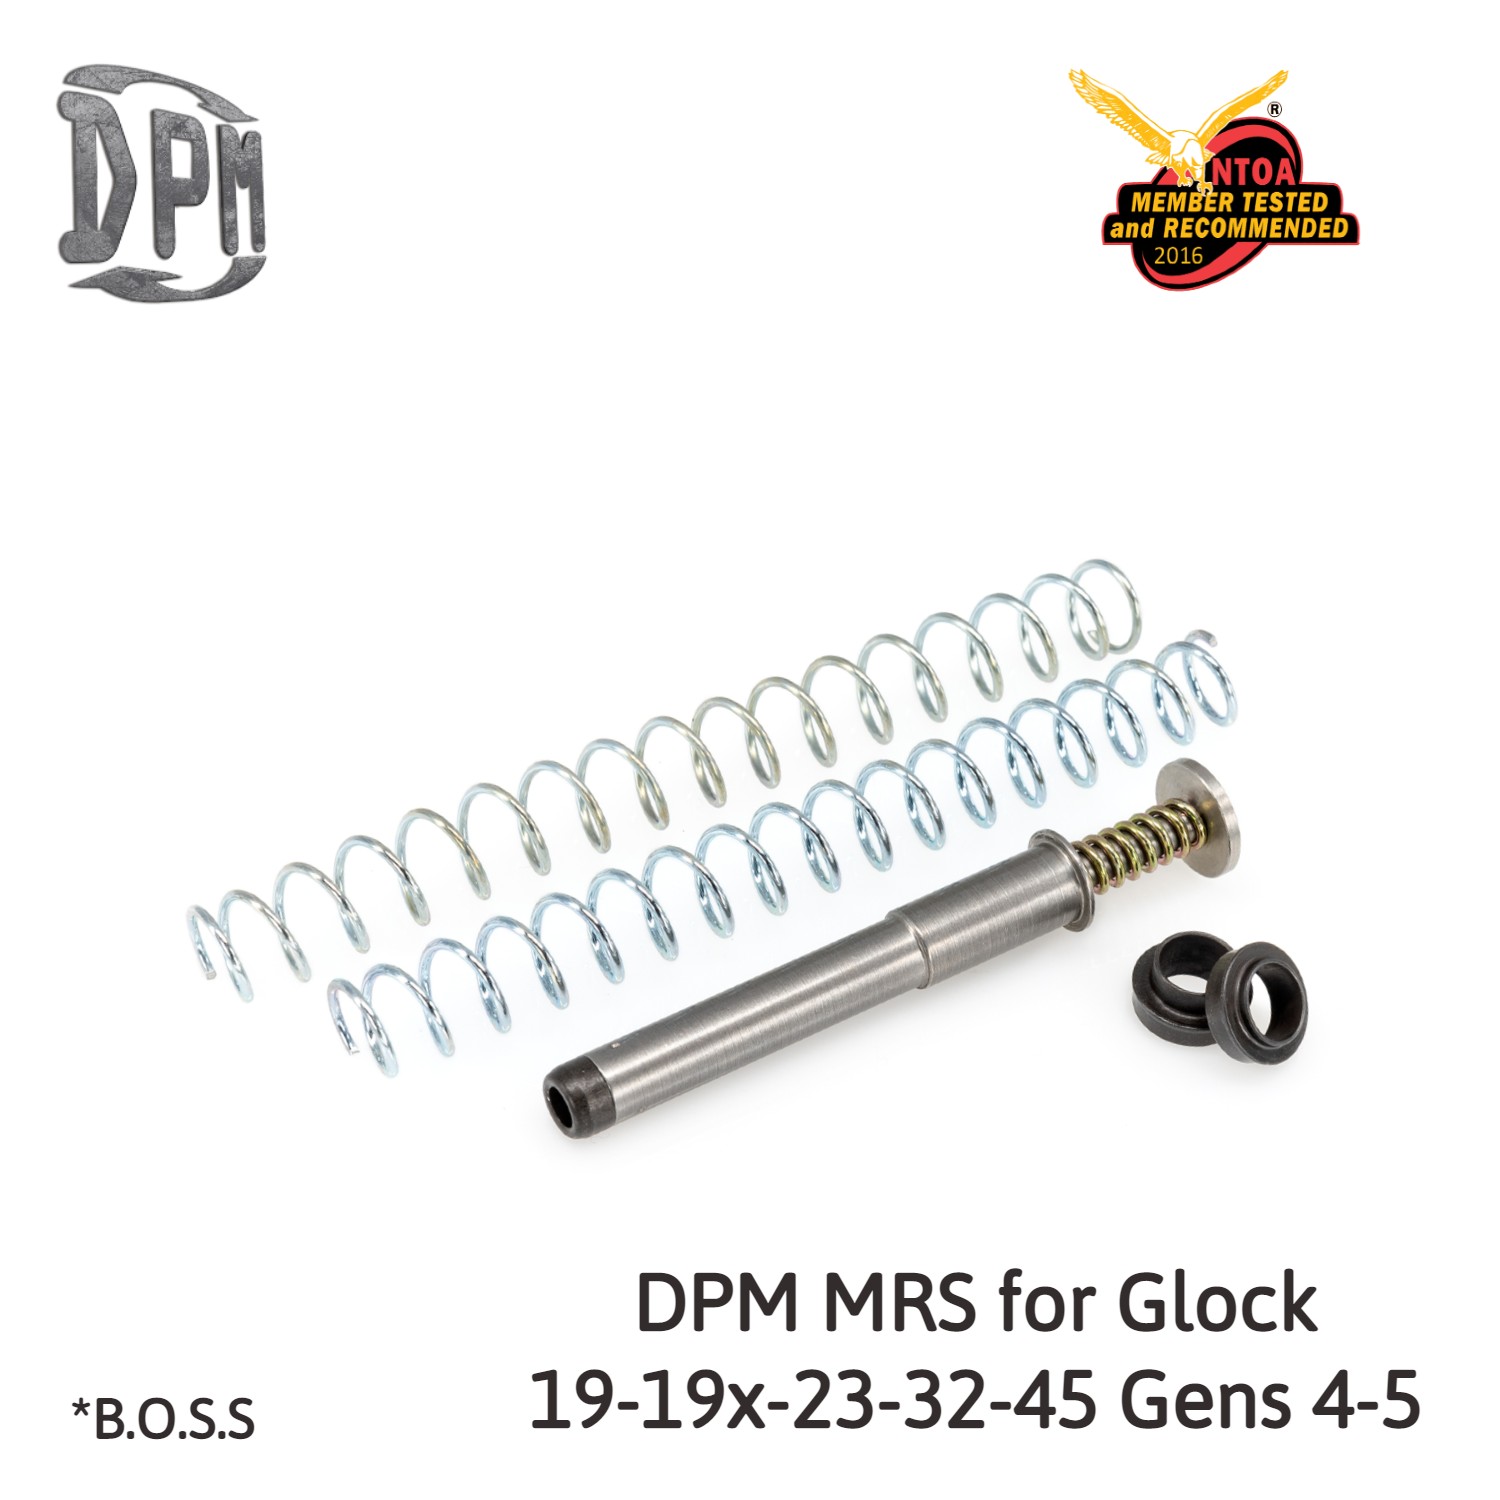 1-DPM-MRS-for-Glock-19-19x-23-32-45-Gens-4-5